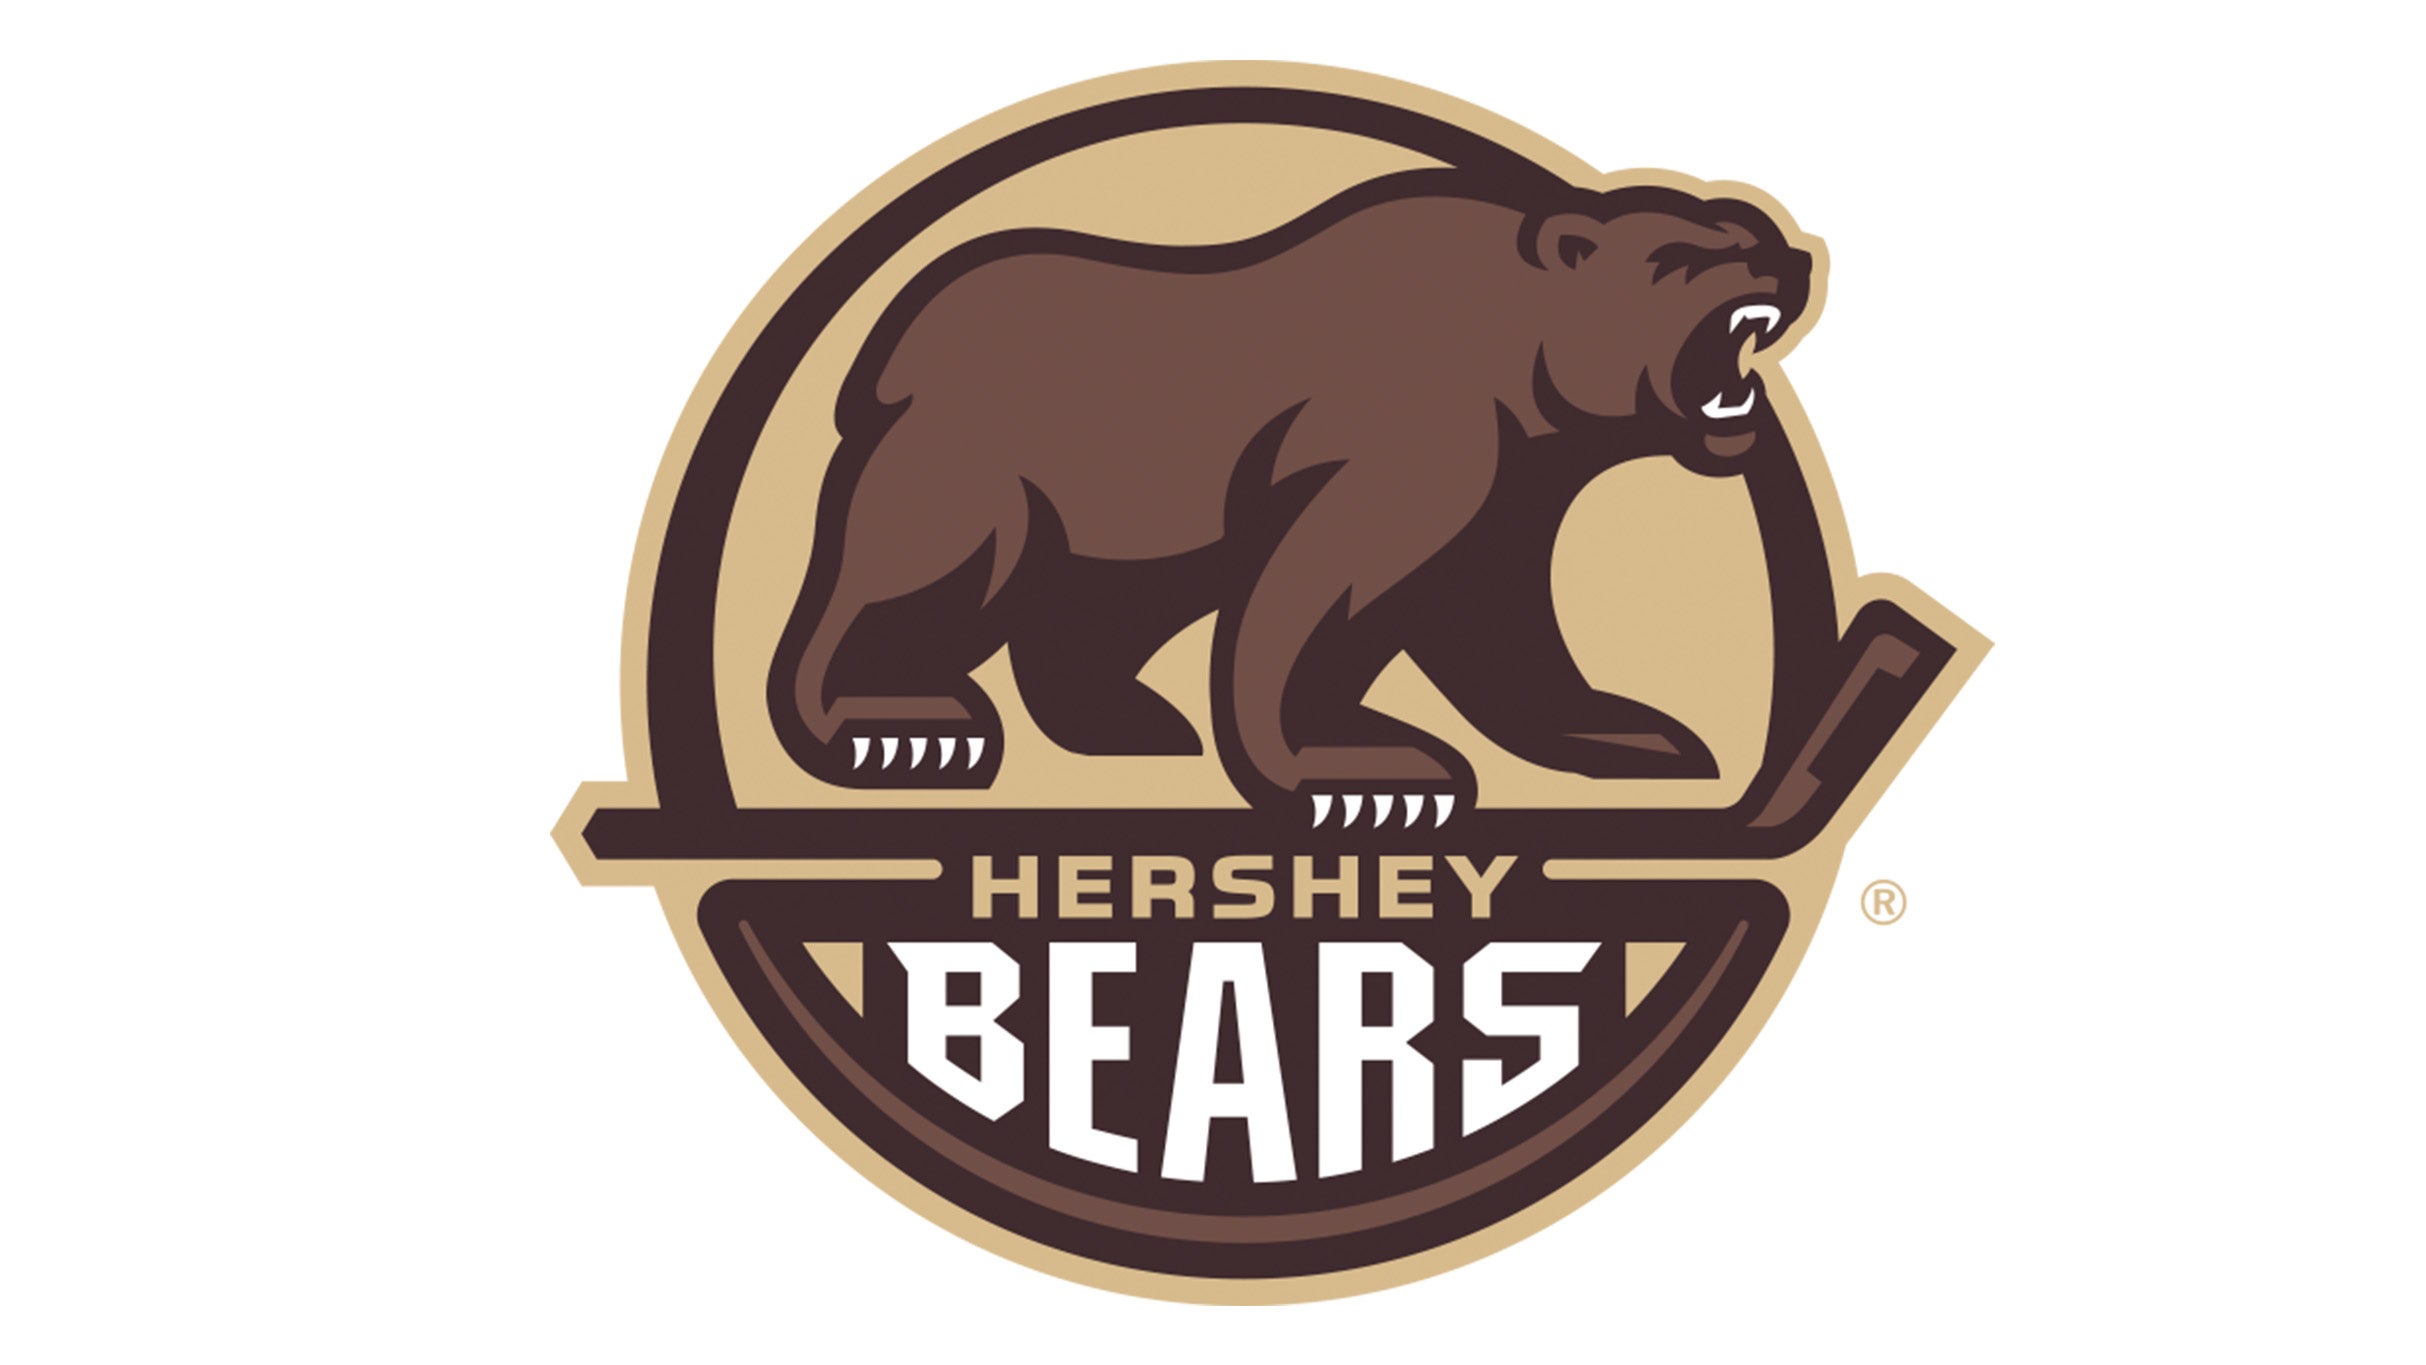 Hershey Bears vs. Wilkes Barre Scranton Penguins in Hershey promo photo for Full Season presale offer code